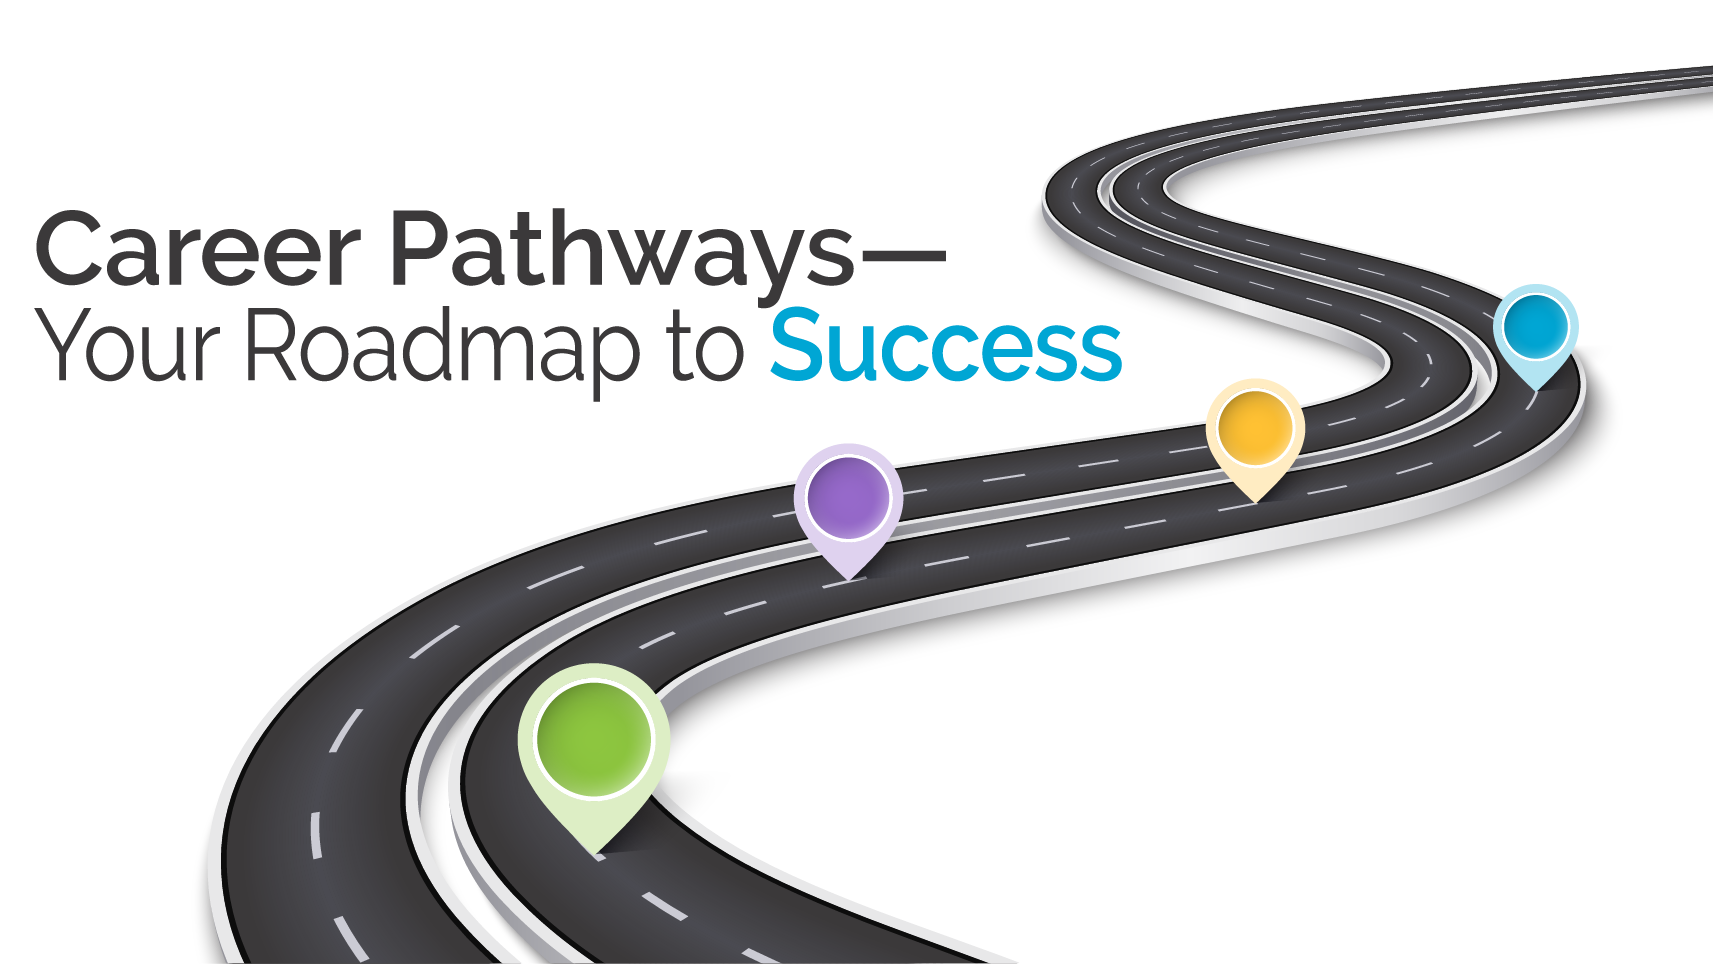 Career Pathways Logo